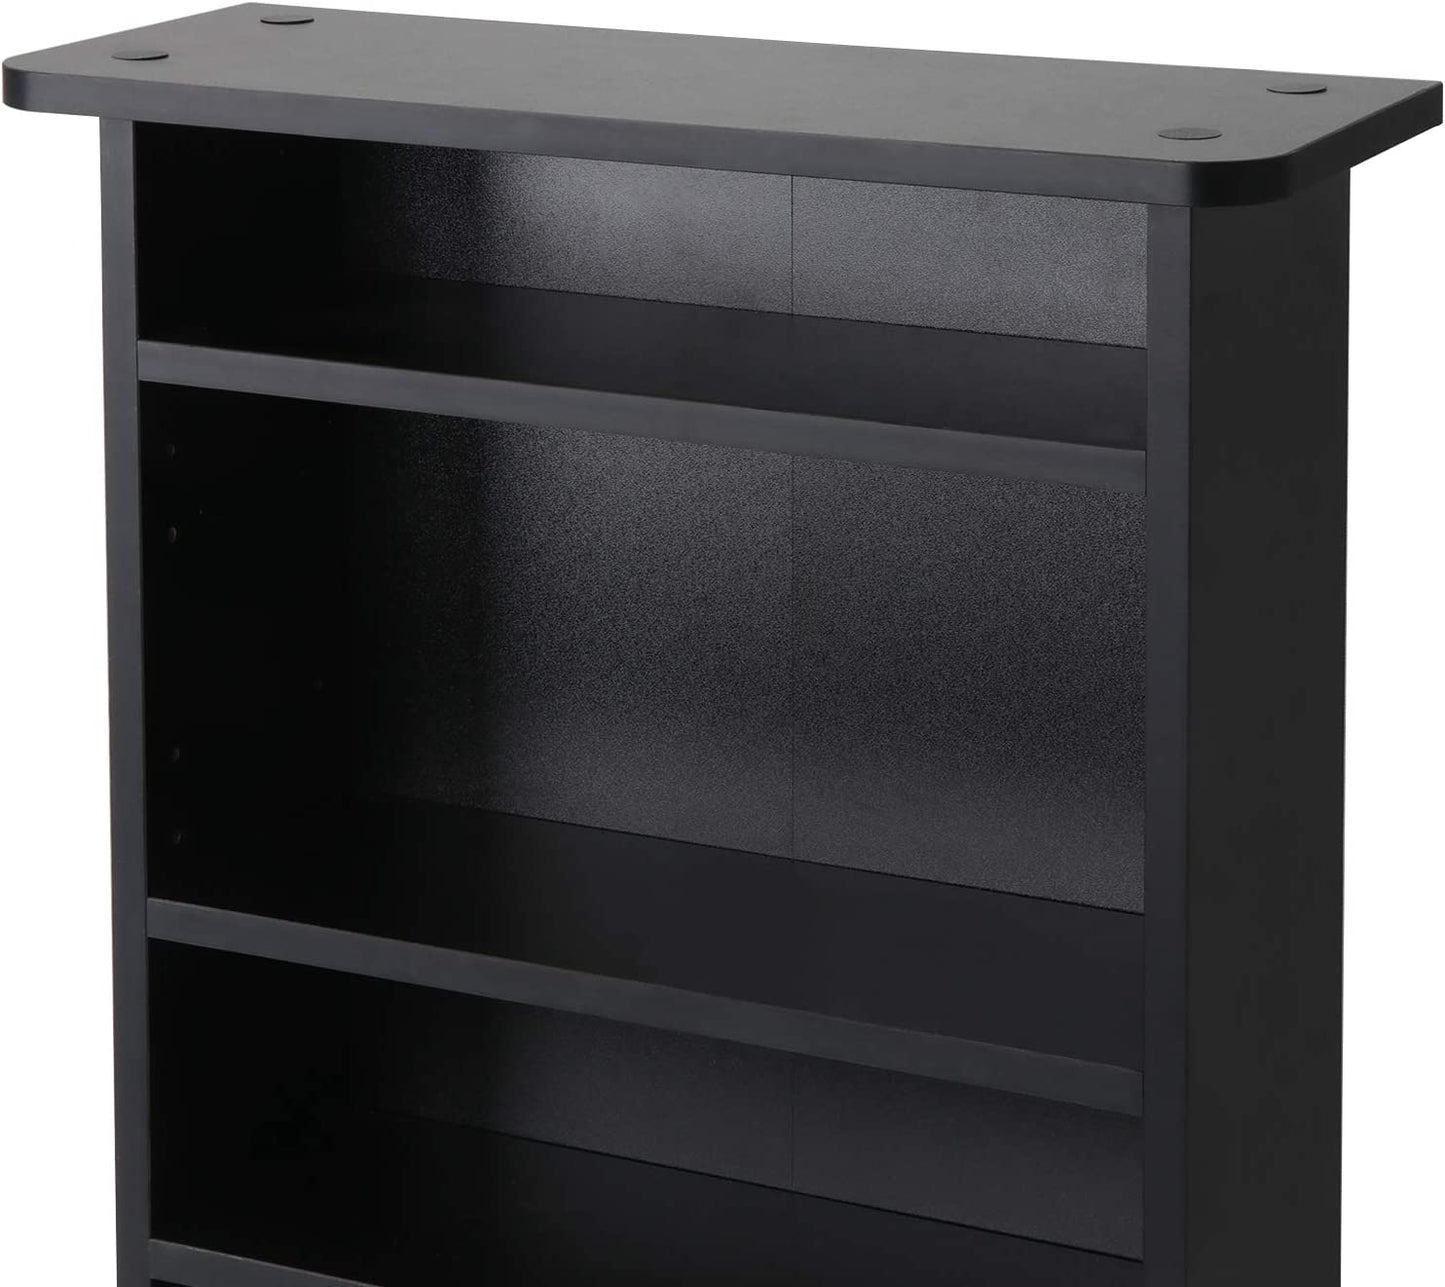 Multimedia Storage Cabinet DVD Rack Book Shelf Organizer Stand Audio Media Tower, 36" X 19" X 7" Black